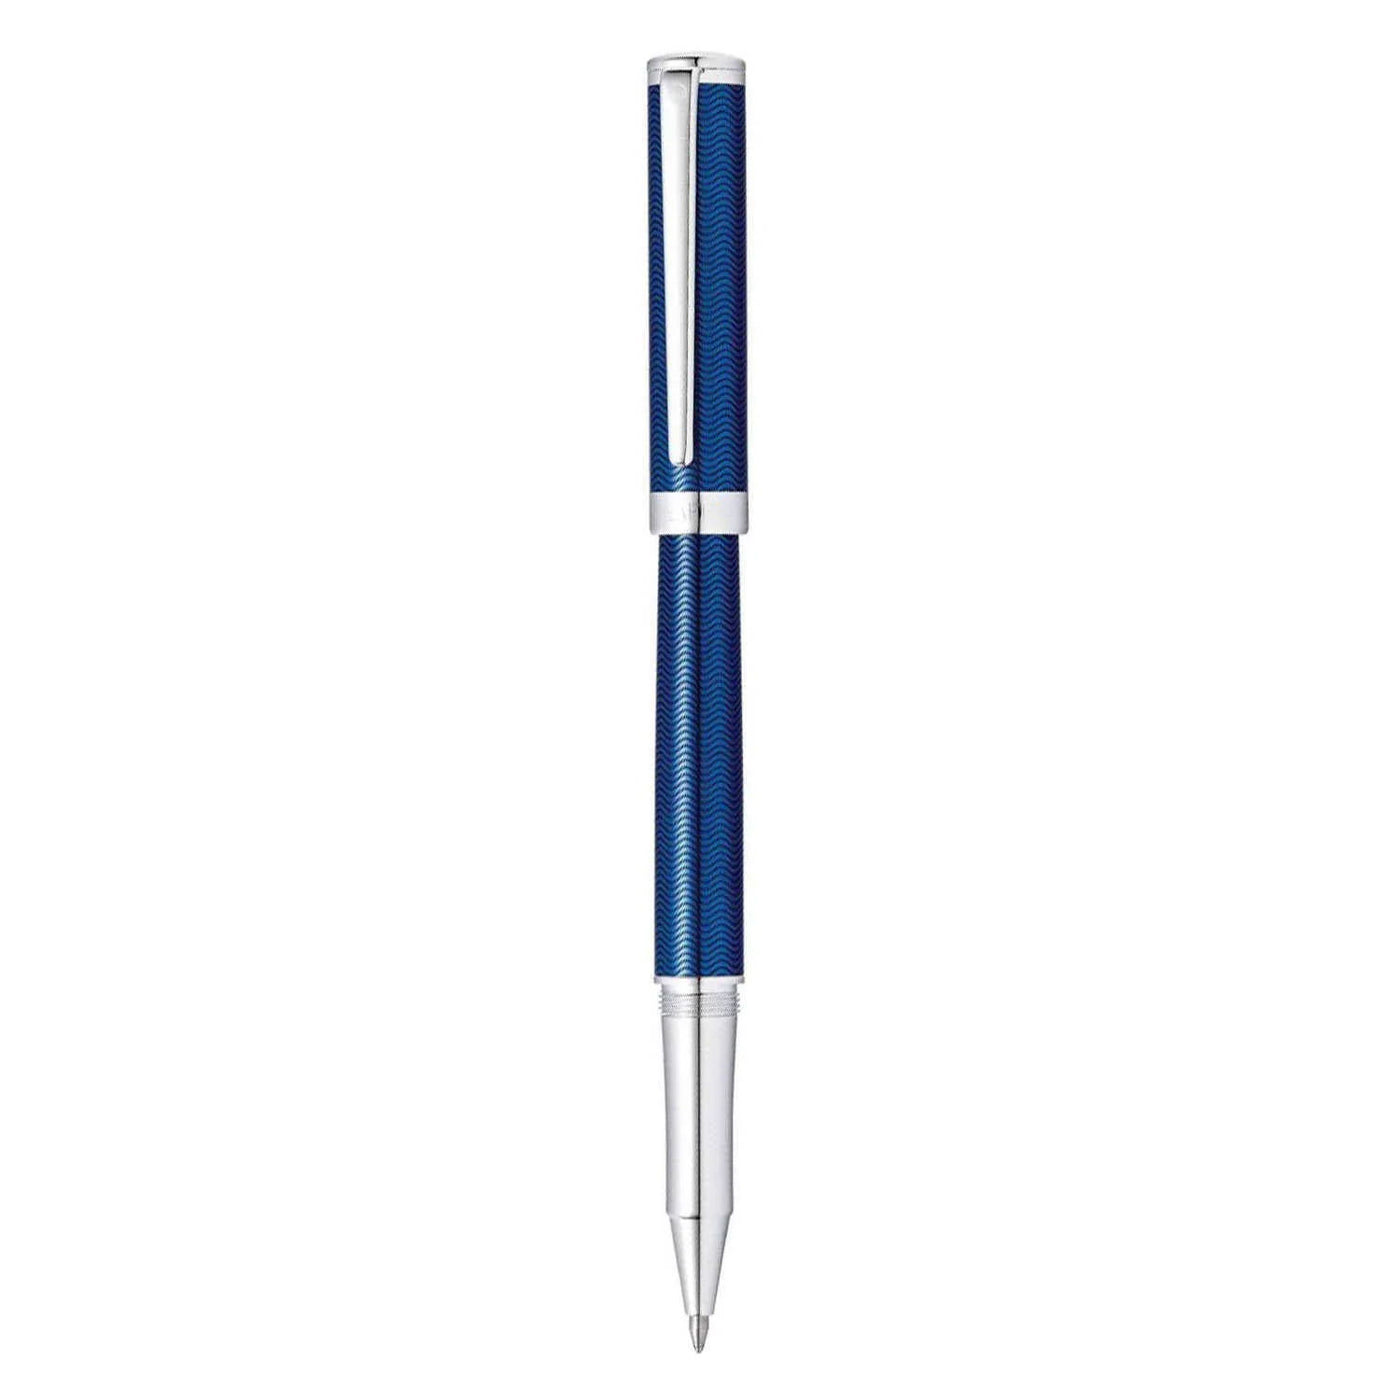 Sheaffer Intensity Roller Ball Pen - Translucent Blue CT 2